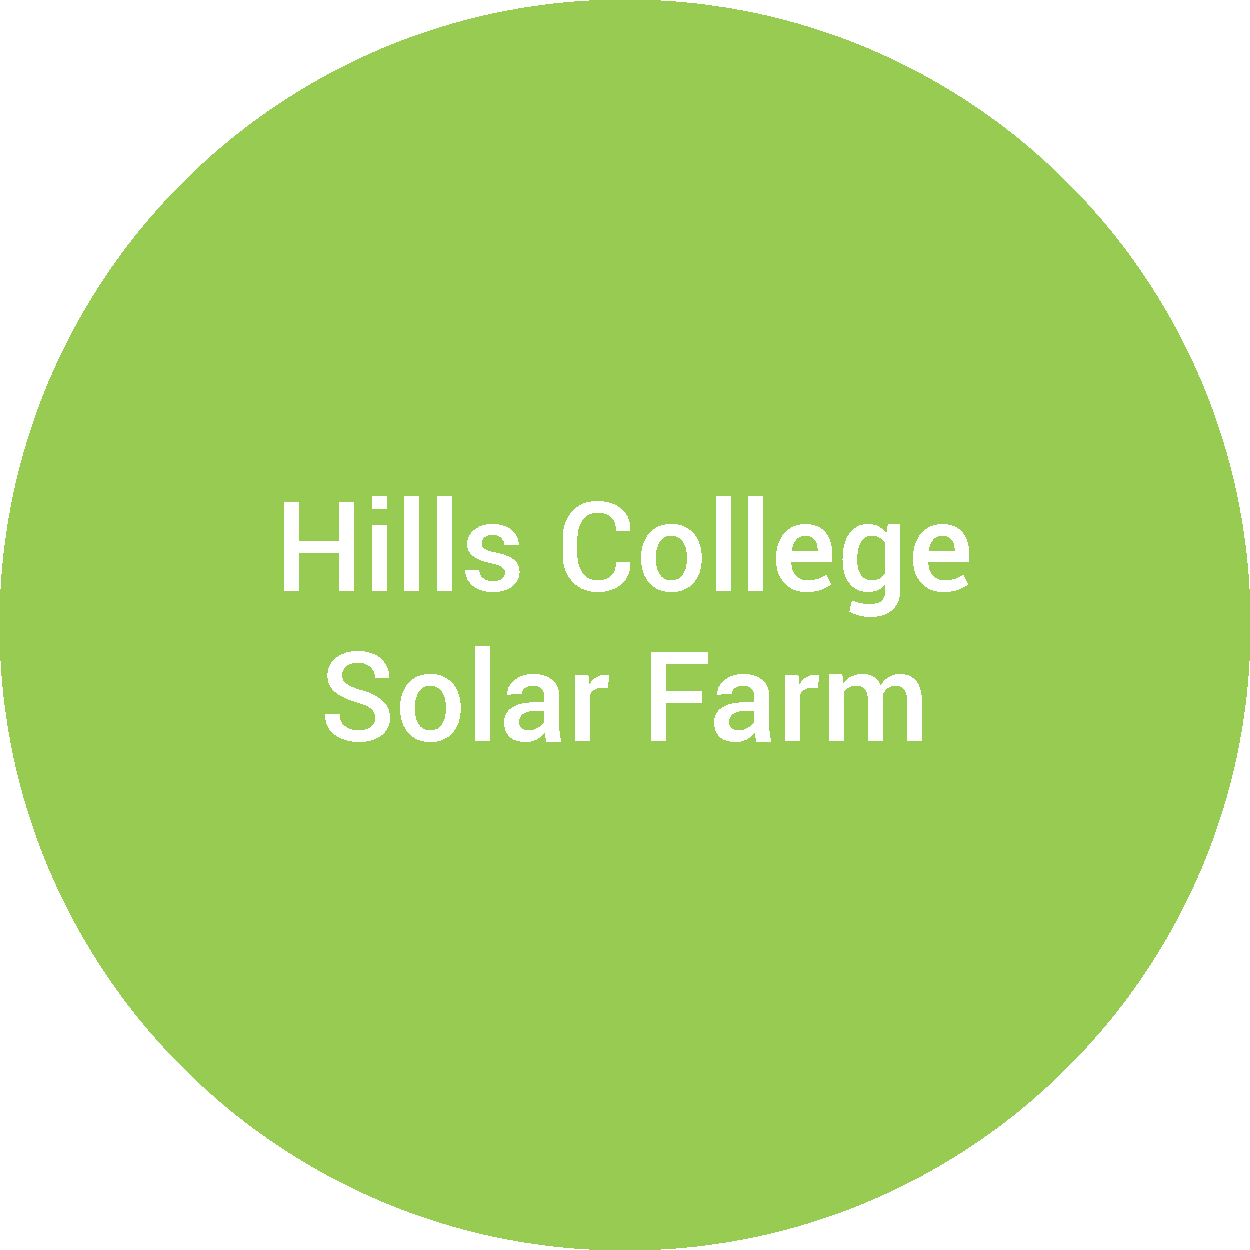 Hills College Solar Farm